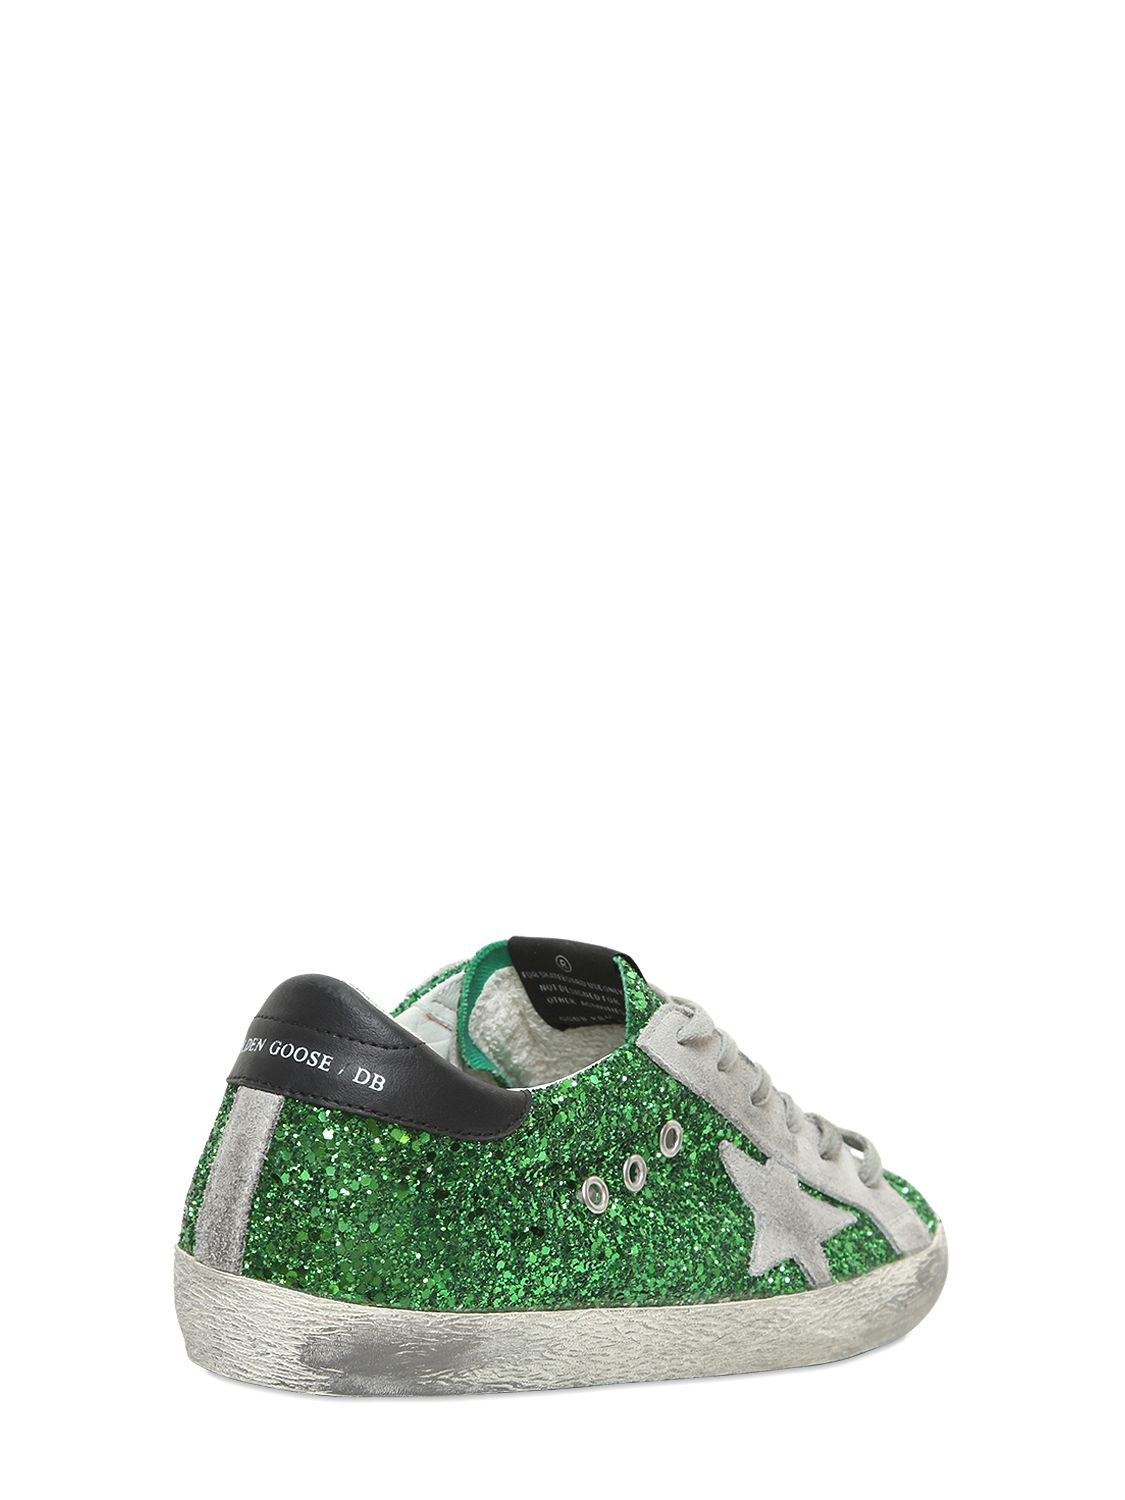 green glitter golden goose sneakers